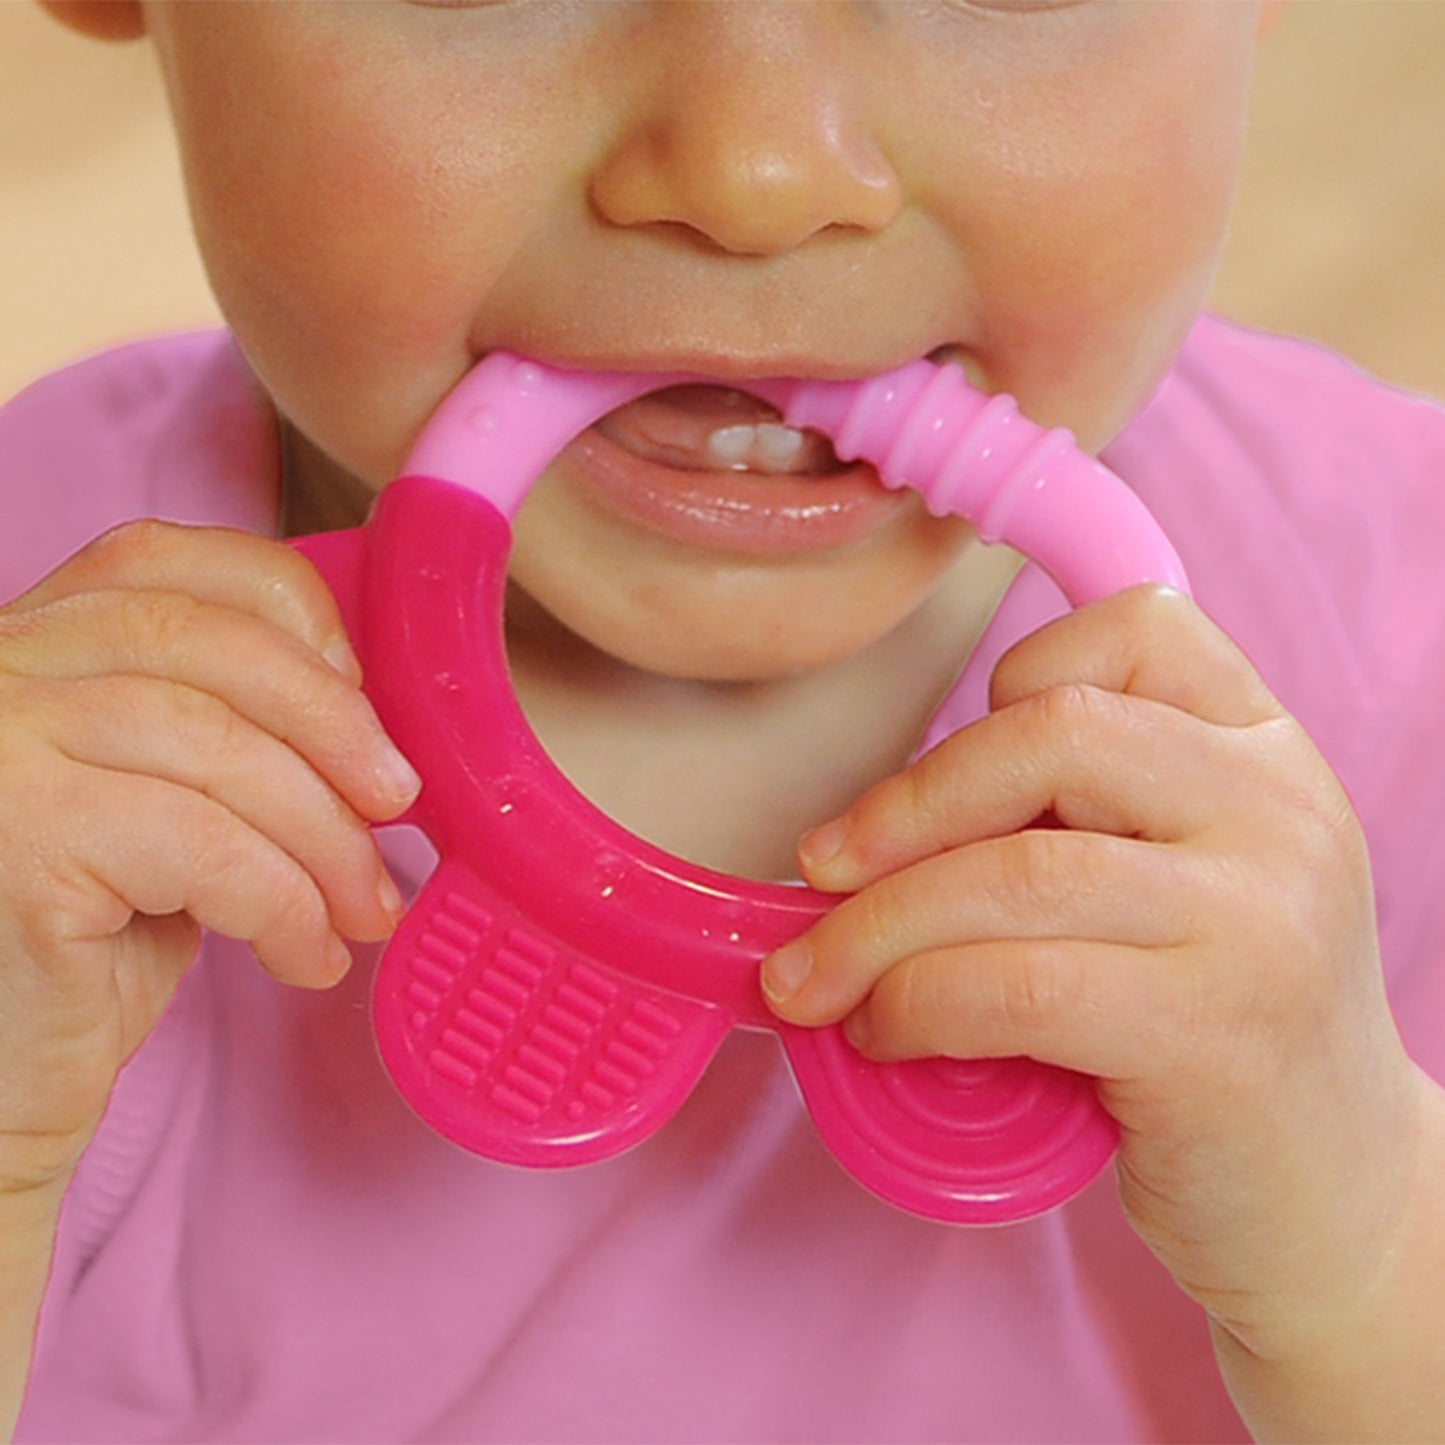 Jucării pentru dentiție din silicon - set 2 bucăți - Green Sprouts by iPlay - Pink&Purple